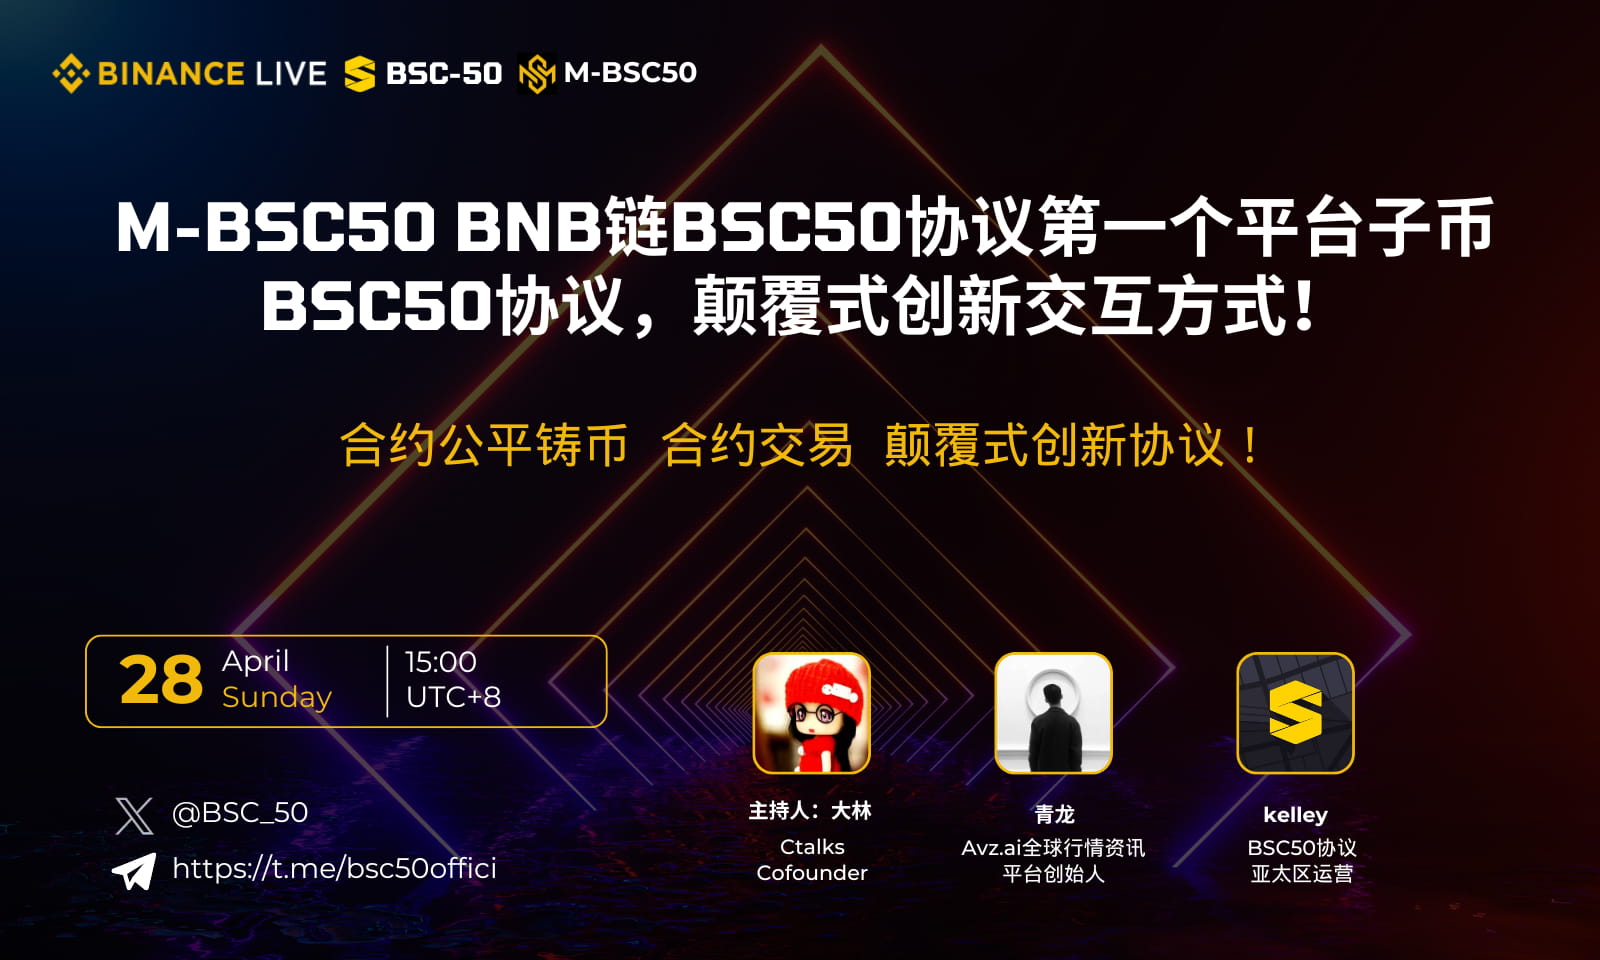 LuckyBox|| M-BSC50 BNB链BSC50协议第一个平台子币BSC50协议，颠覆式创新交互方式!